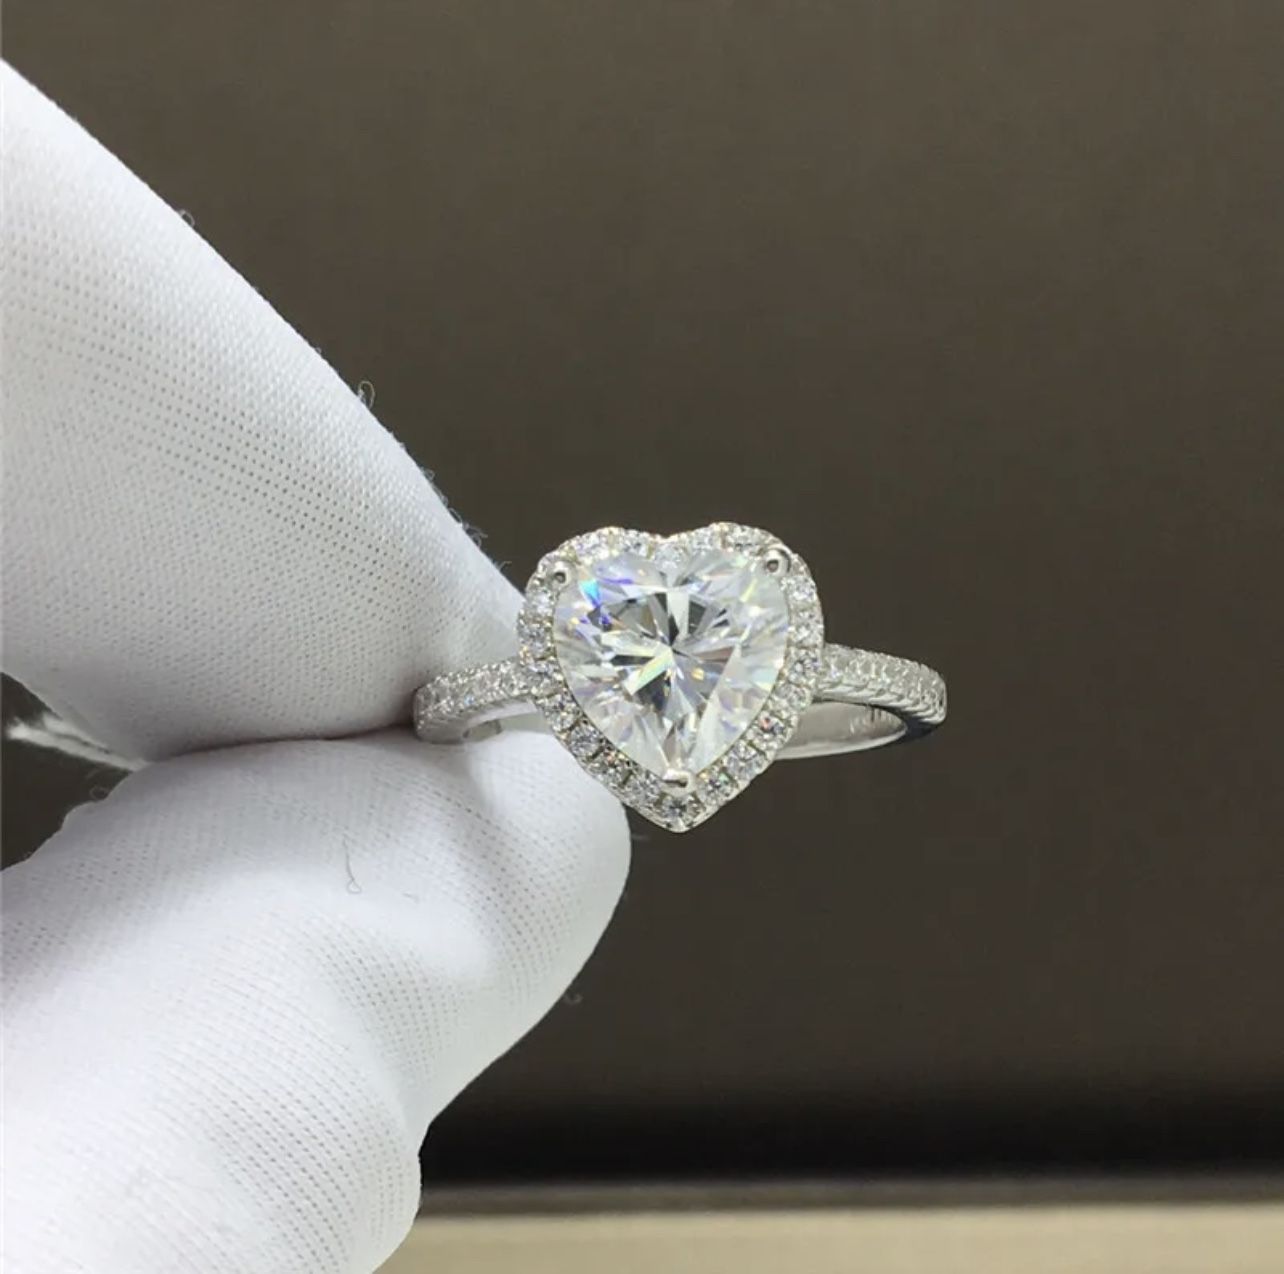 Sterling Silver 925 VVS1 1CT Certified Moissanite Diamond 💎 Excellent Cut sparkling Ring Size 6.5  $250  MOISSANITE DIAMOND 💎 